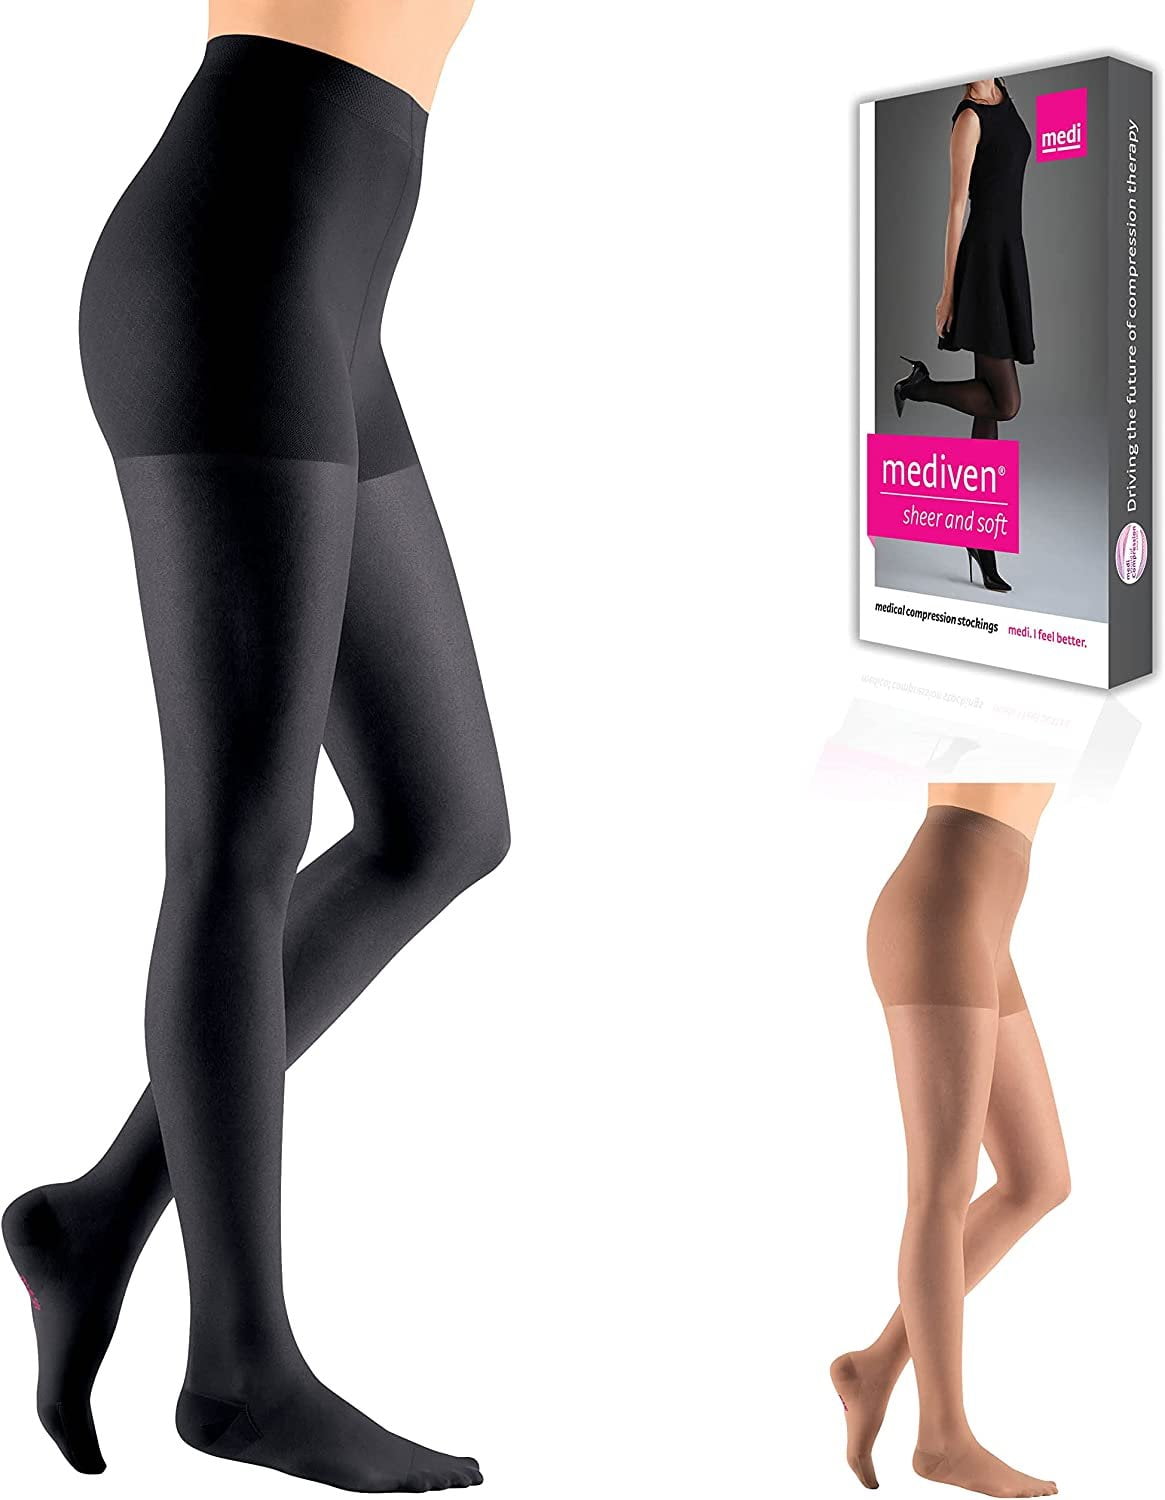 mediven sheer & soft for Women, 30-40 mmHg Panty Closed Toe Compression  Stockings, Ebony, VI-Petite 